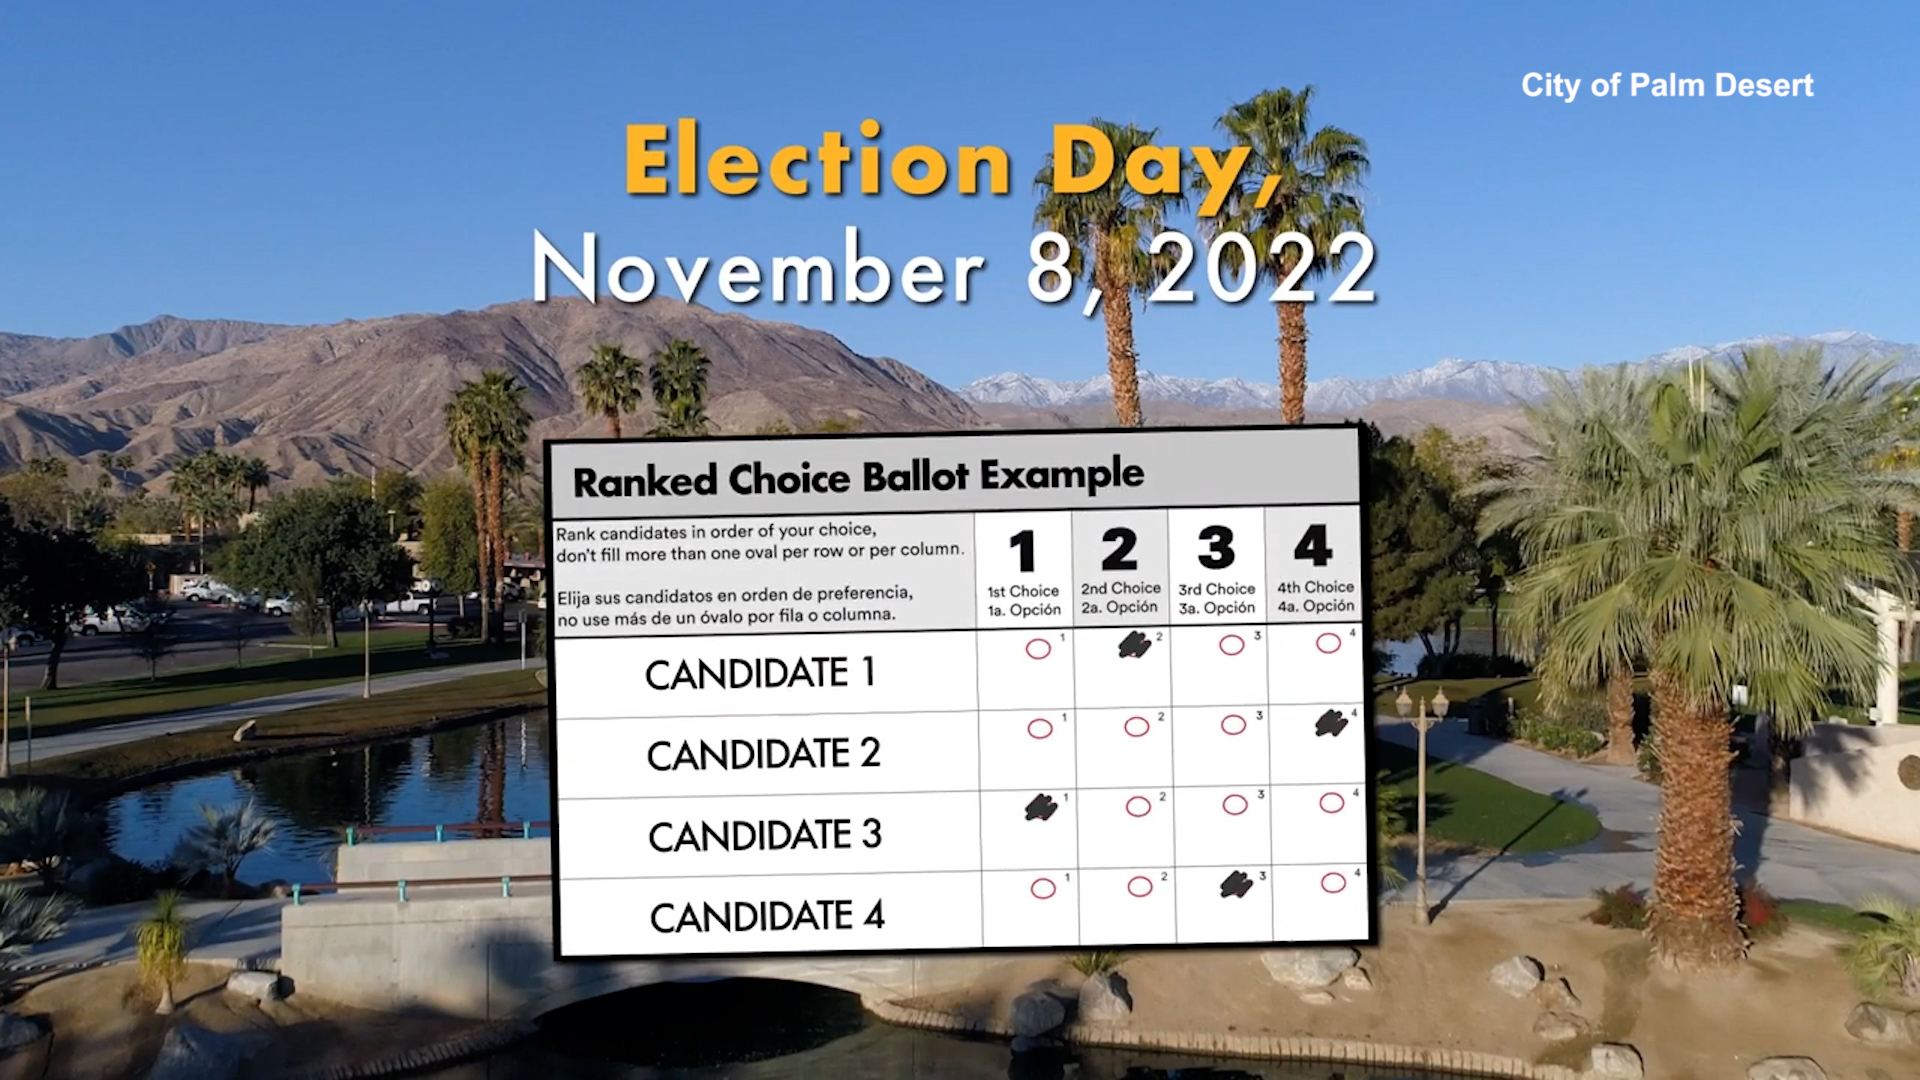 Palm Desert deploys ‘ranked choice voting’ on November ballots